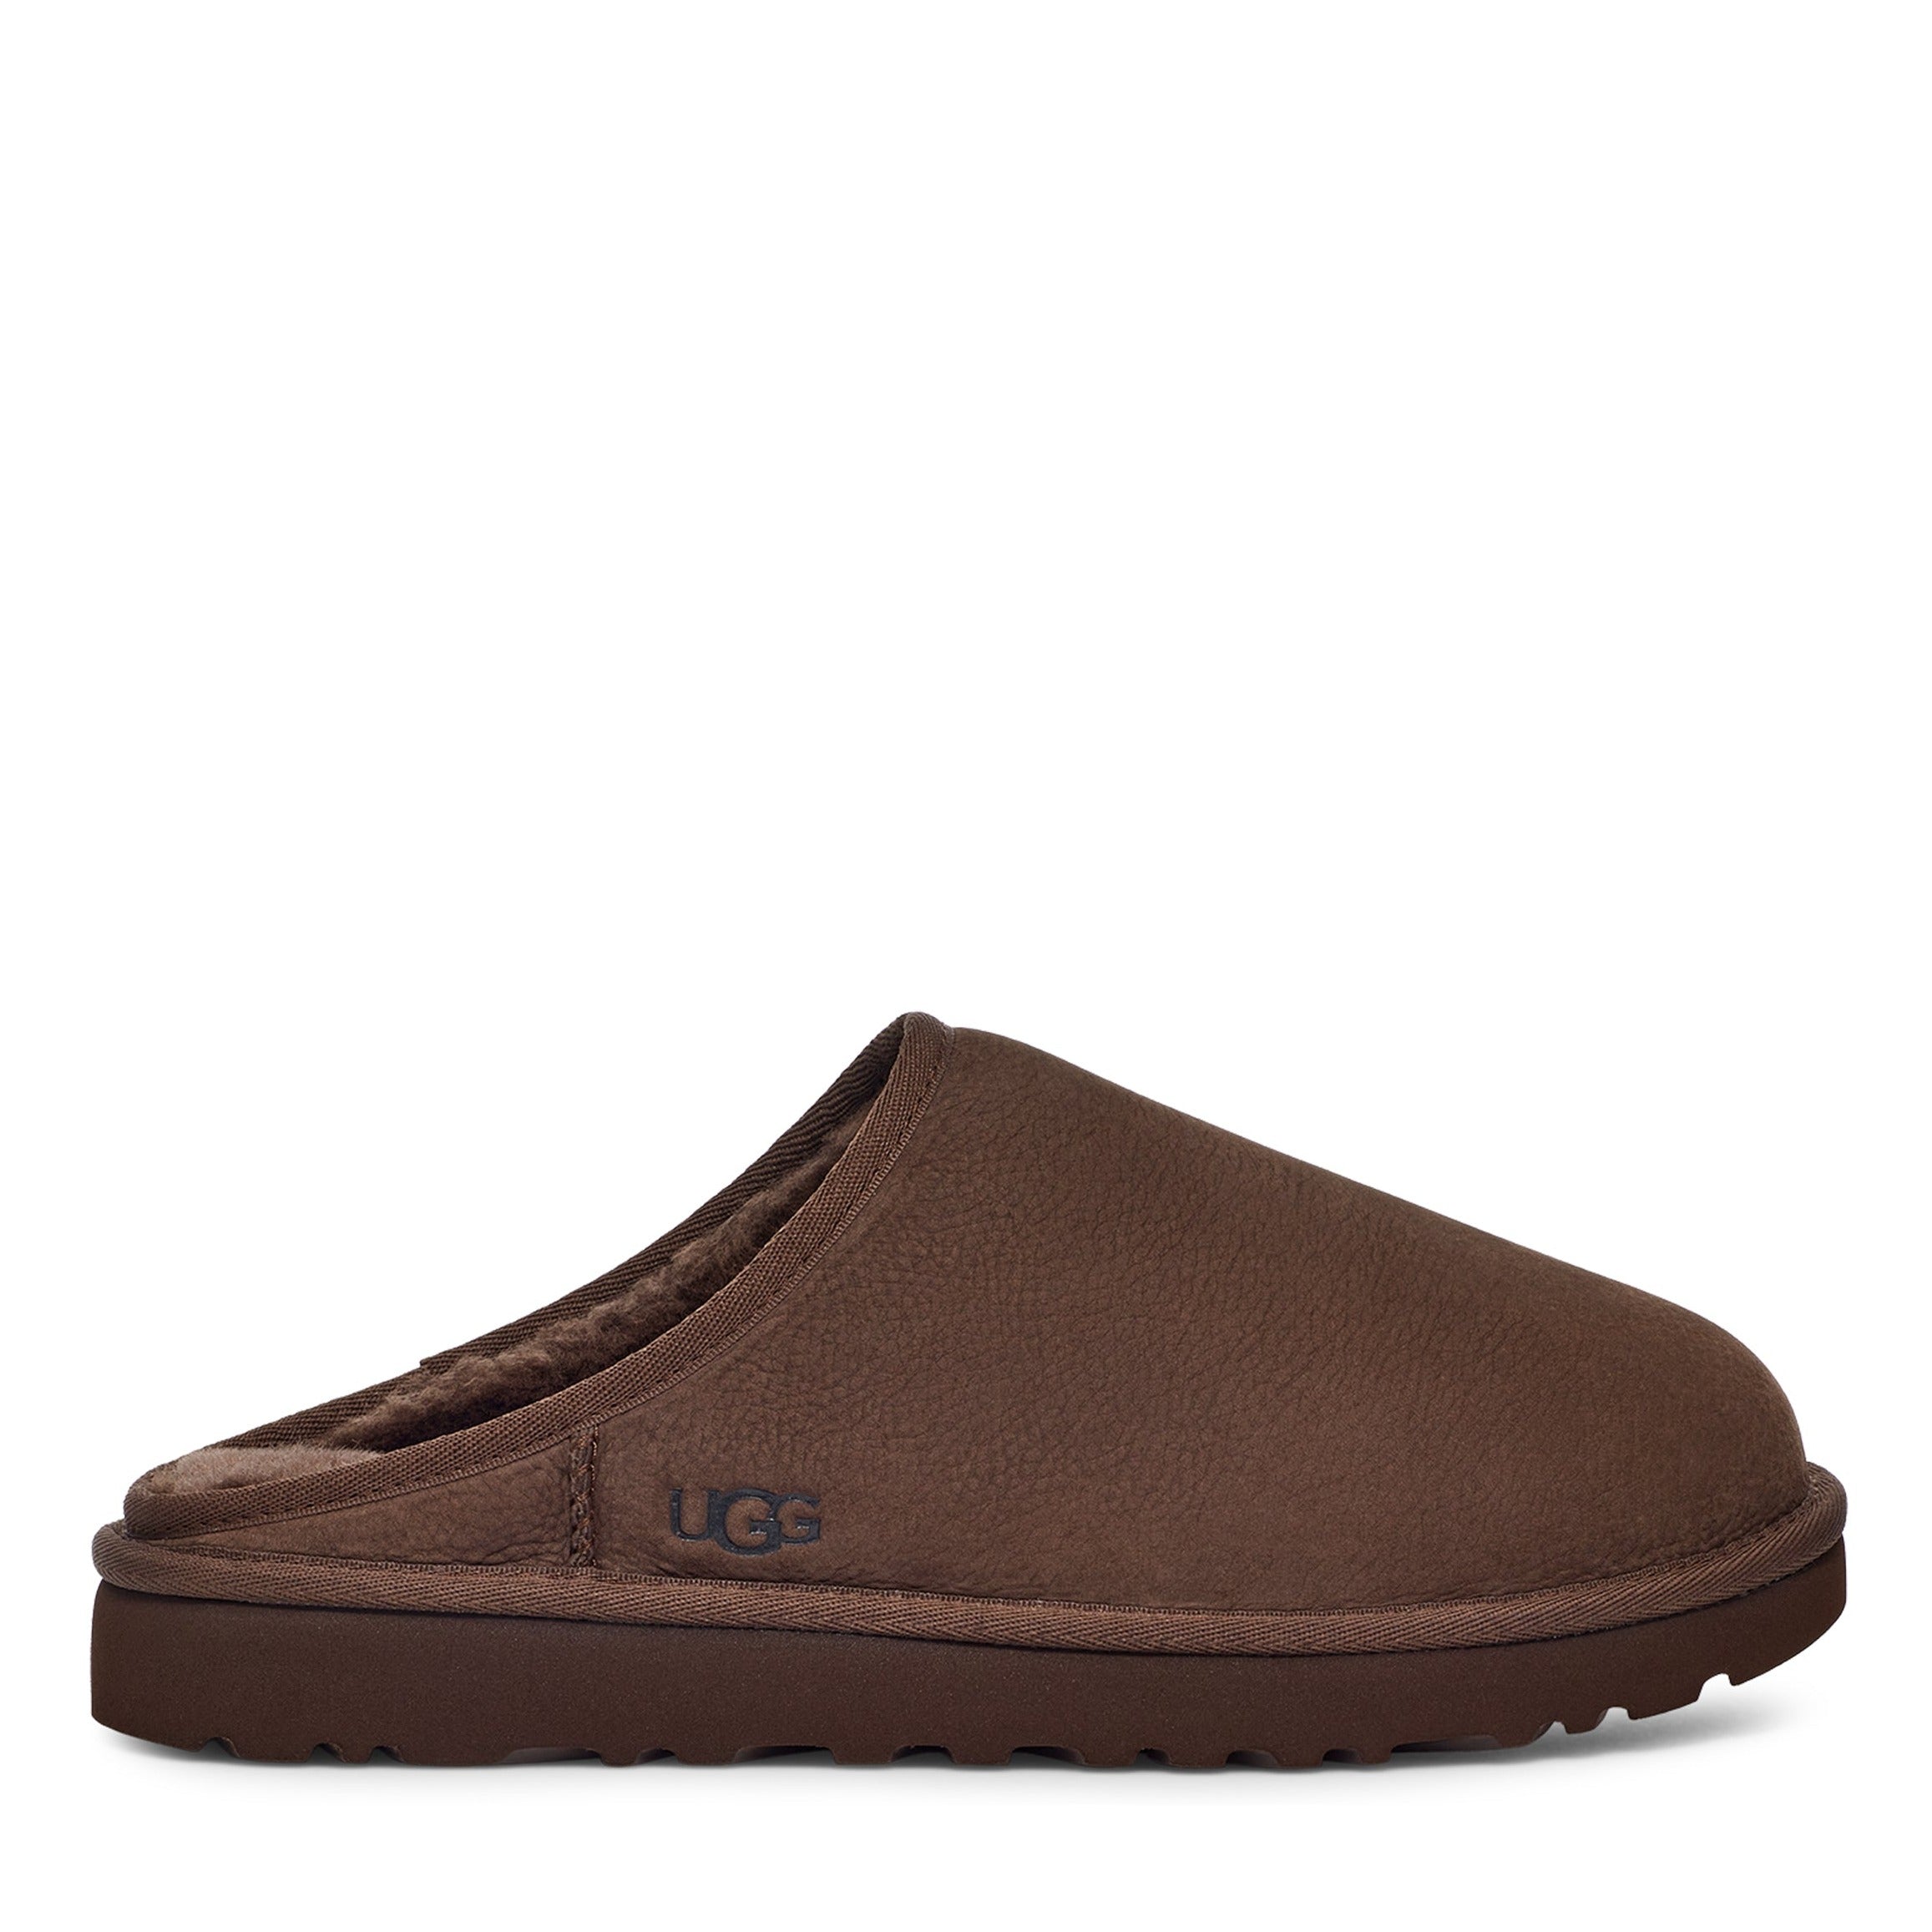 Sample UGG Classic Slip-On Slippers Leather Burnt Cedar 8 